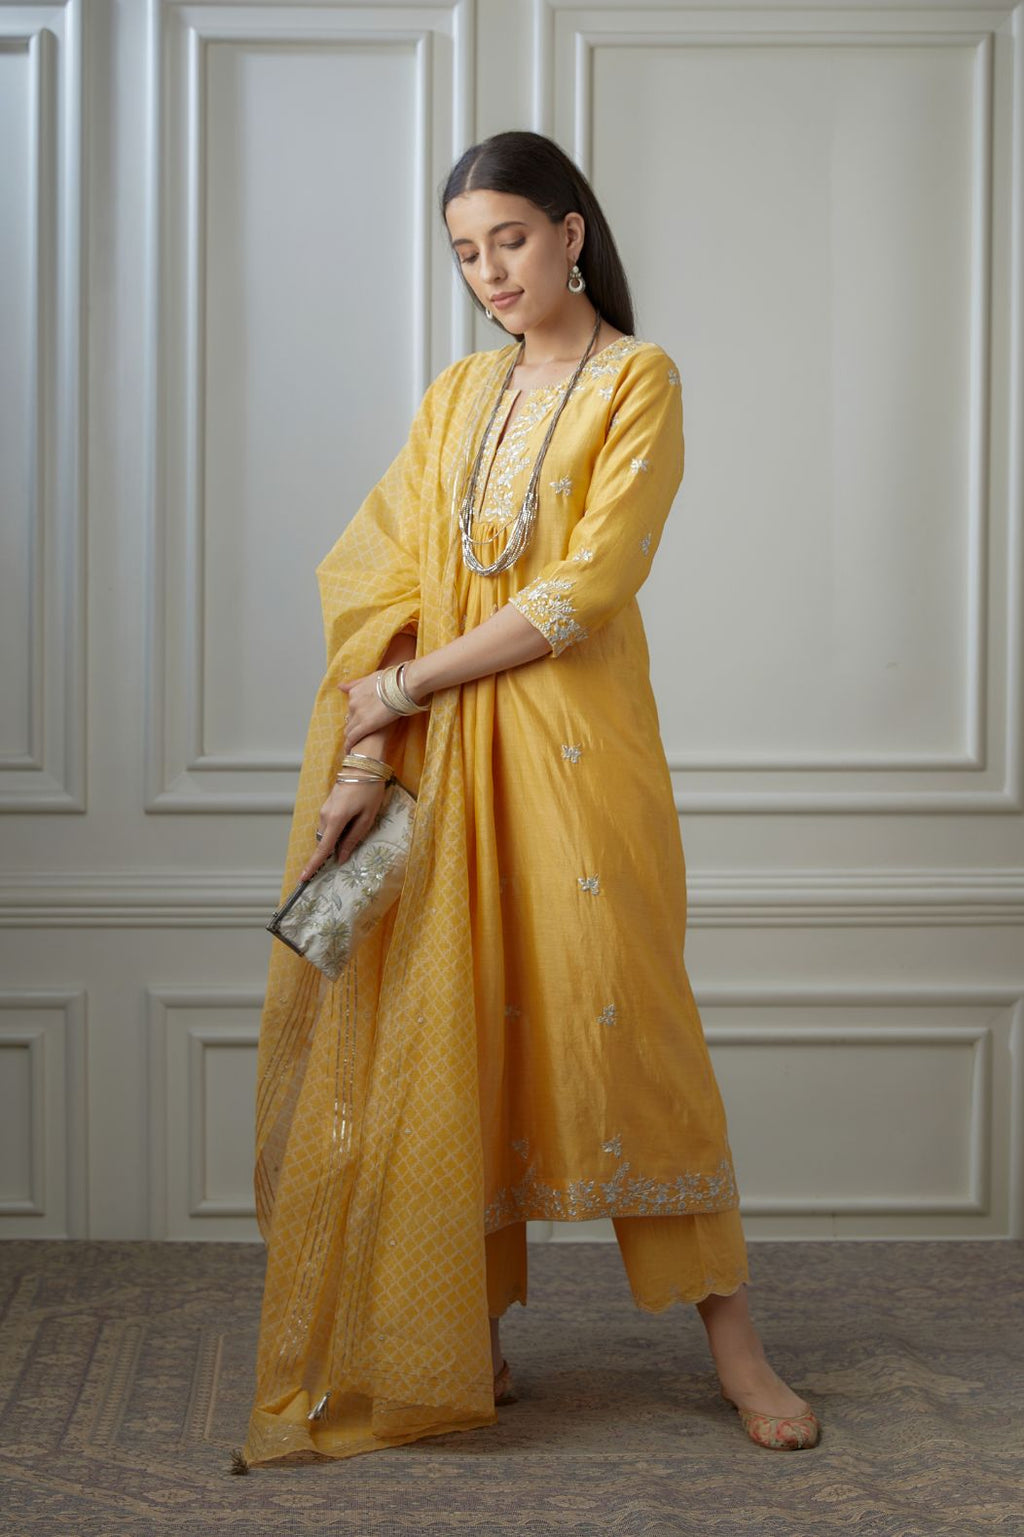 Golden yellow silver zari embroidered kurta dress set with fine gathers at waistline